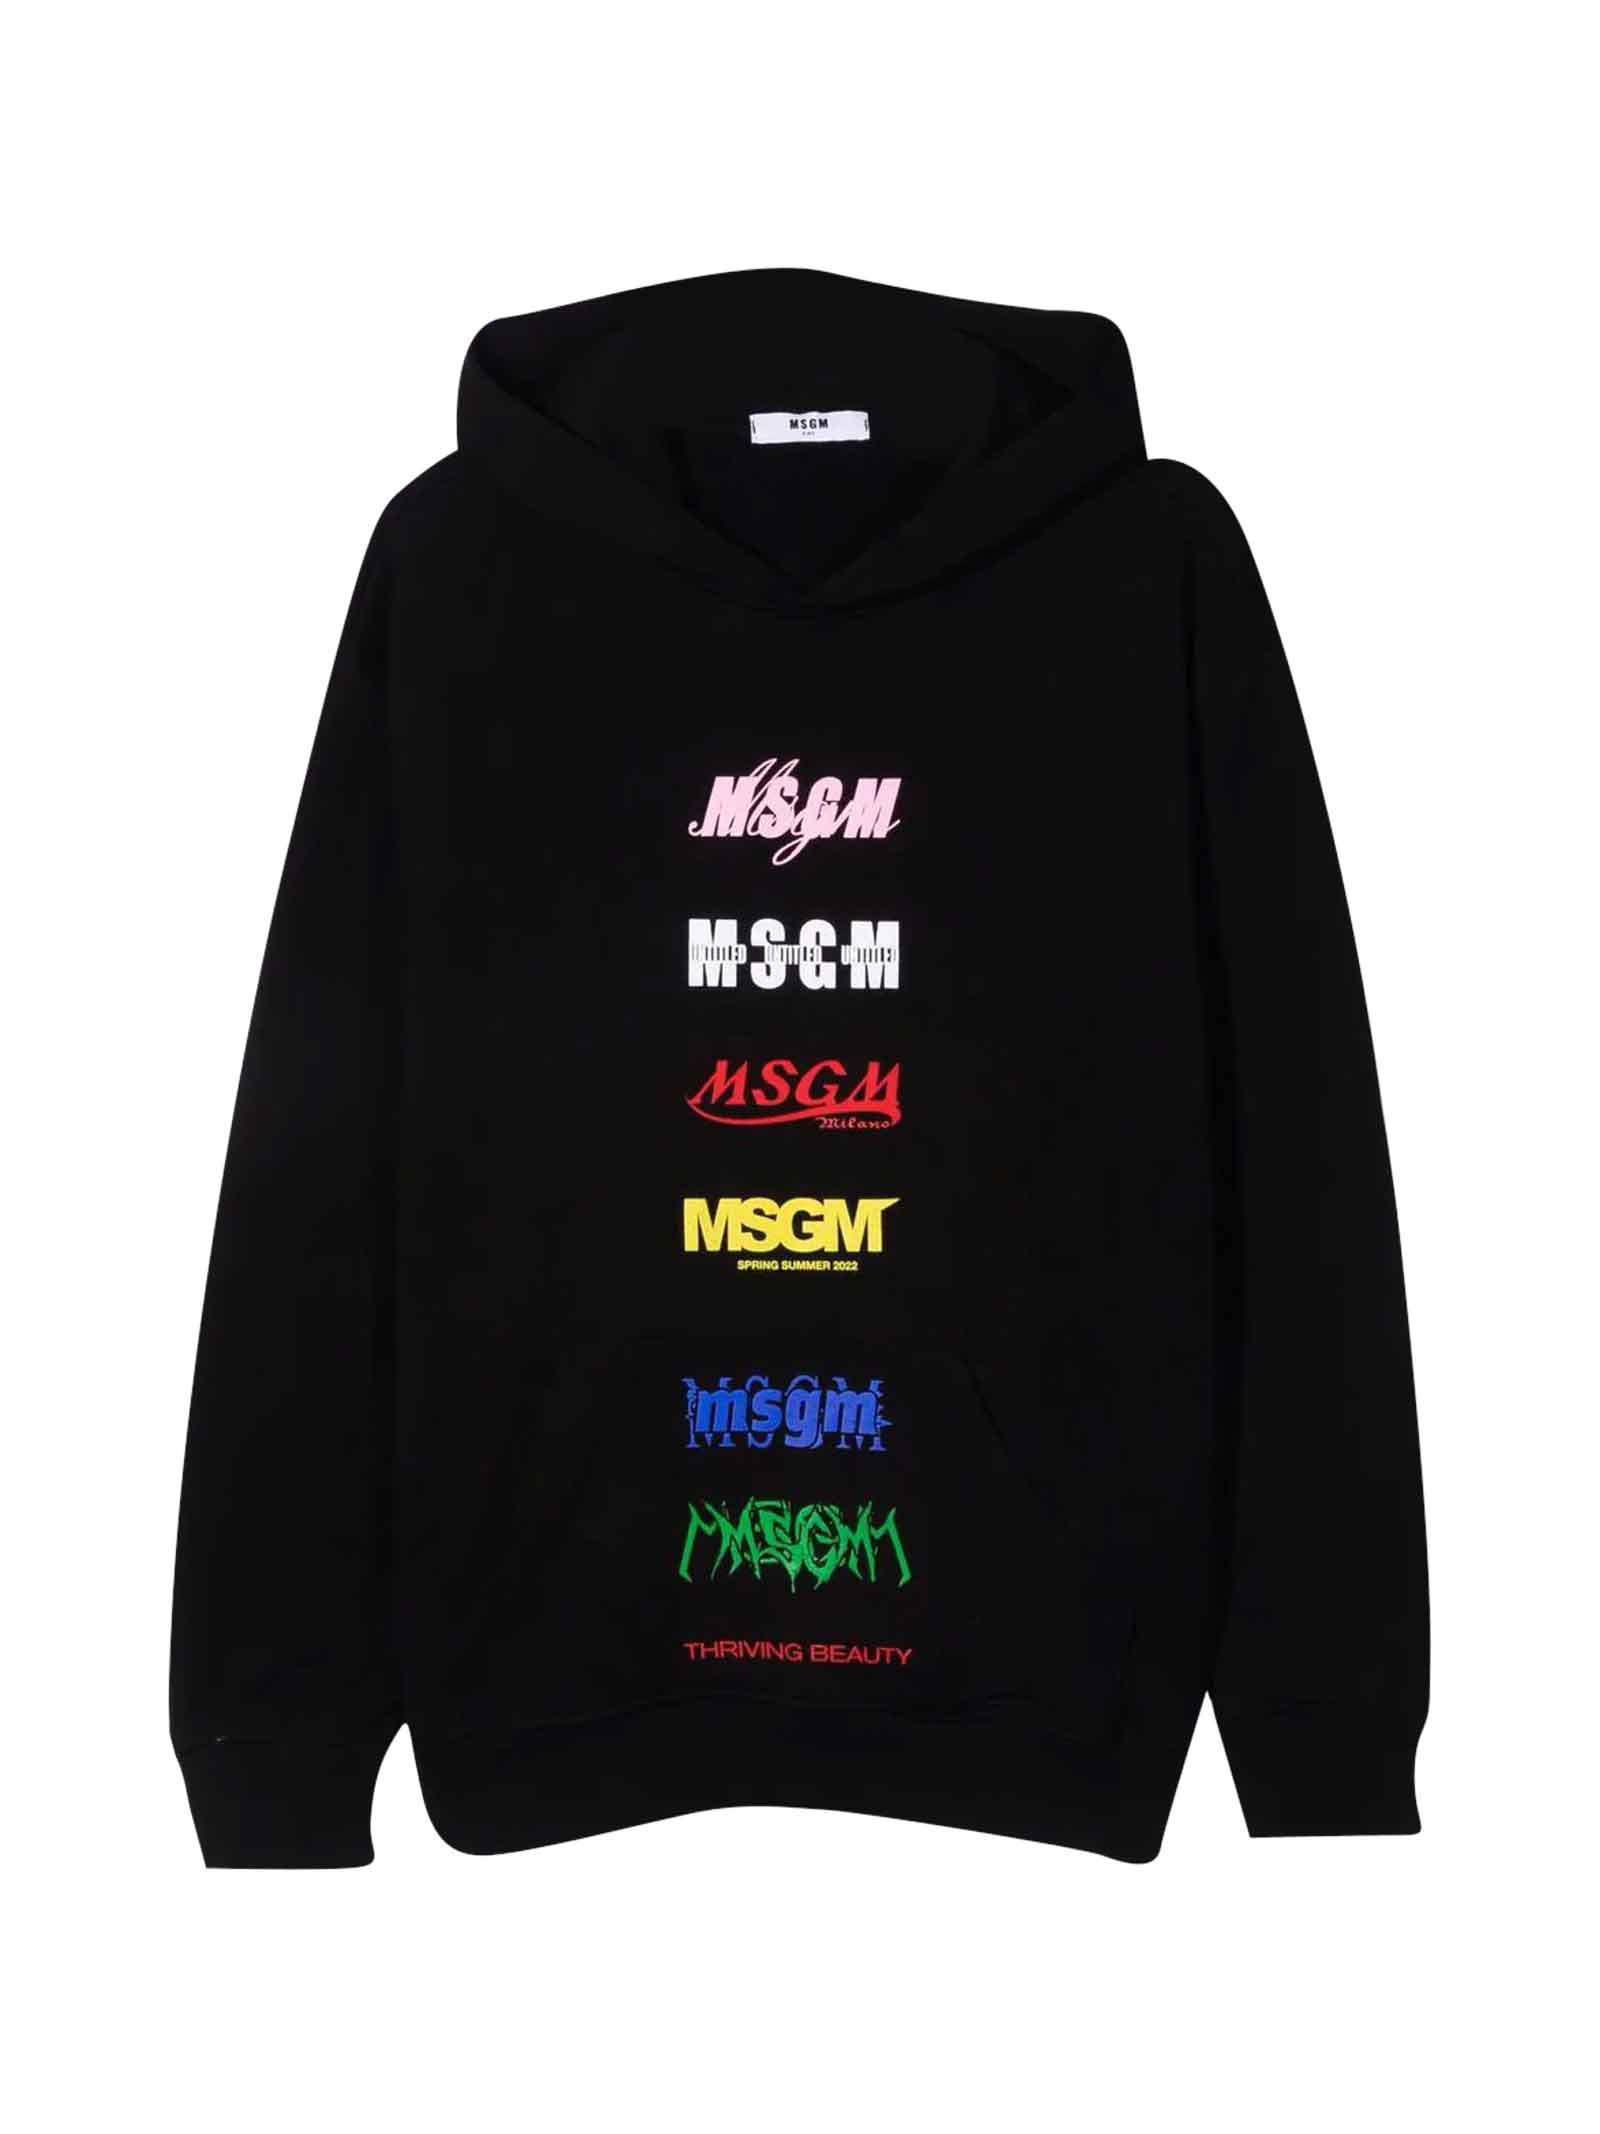 MSGM Black Sweatshirt Girl